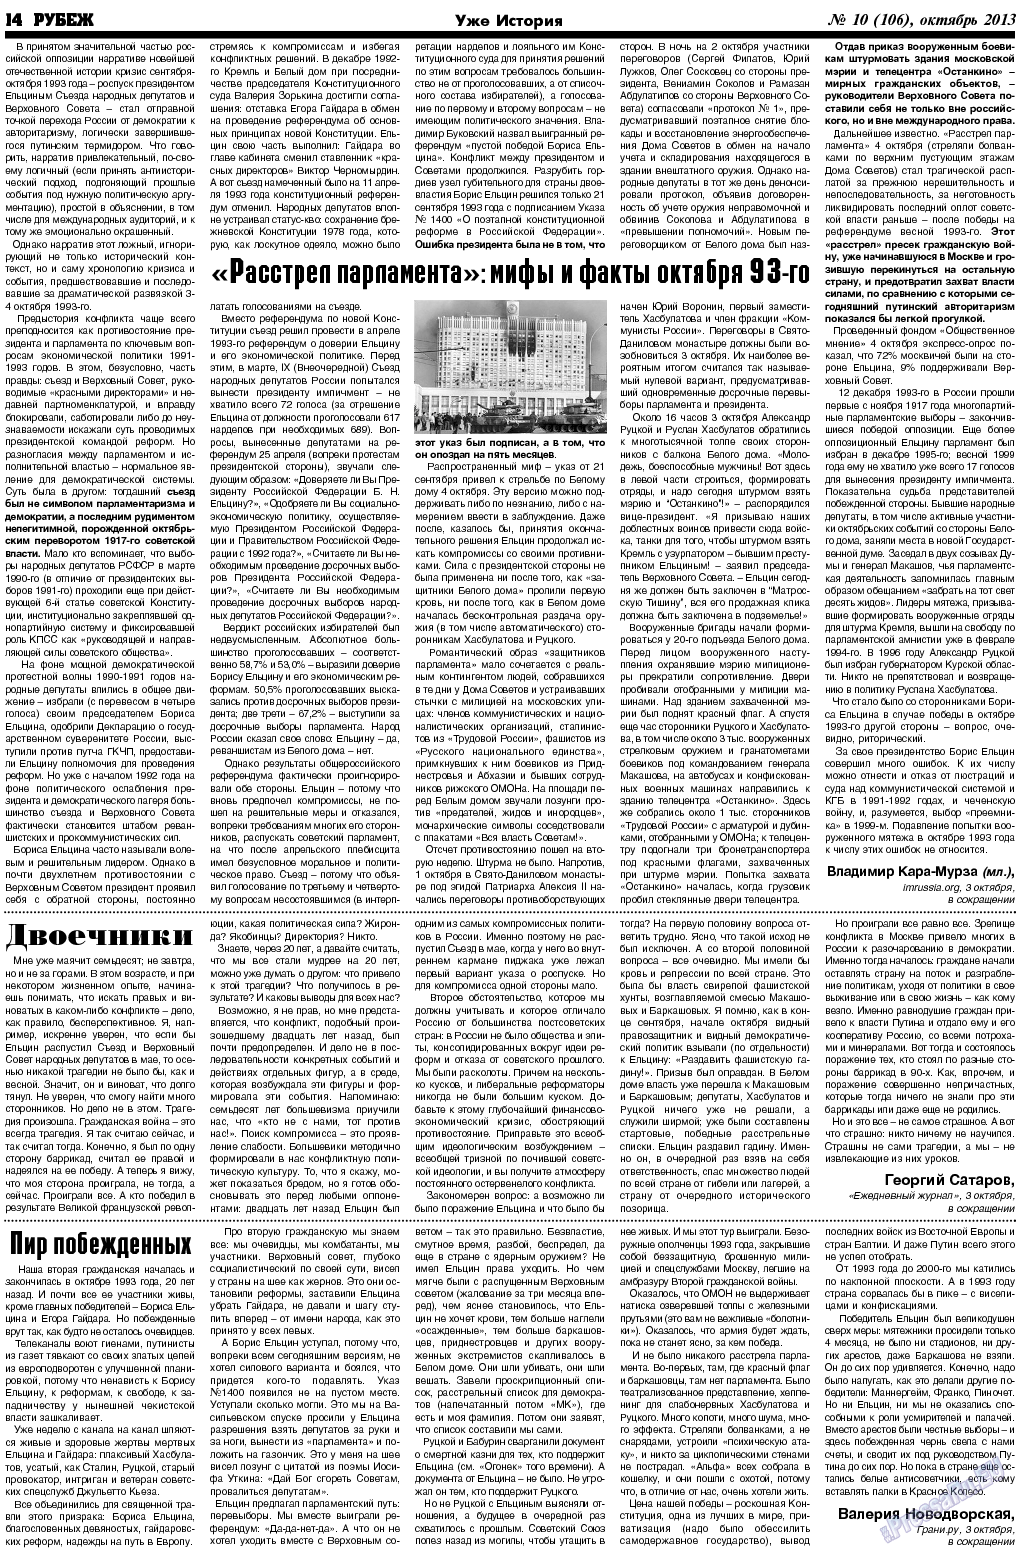 Рубеж, газета. 2013 №10 стр.14